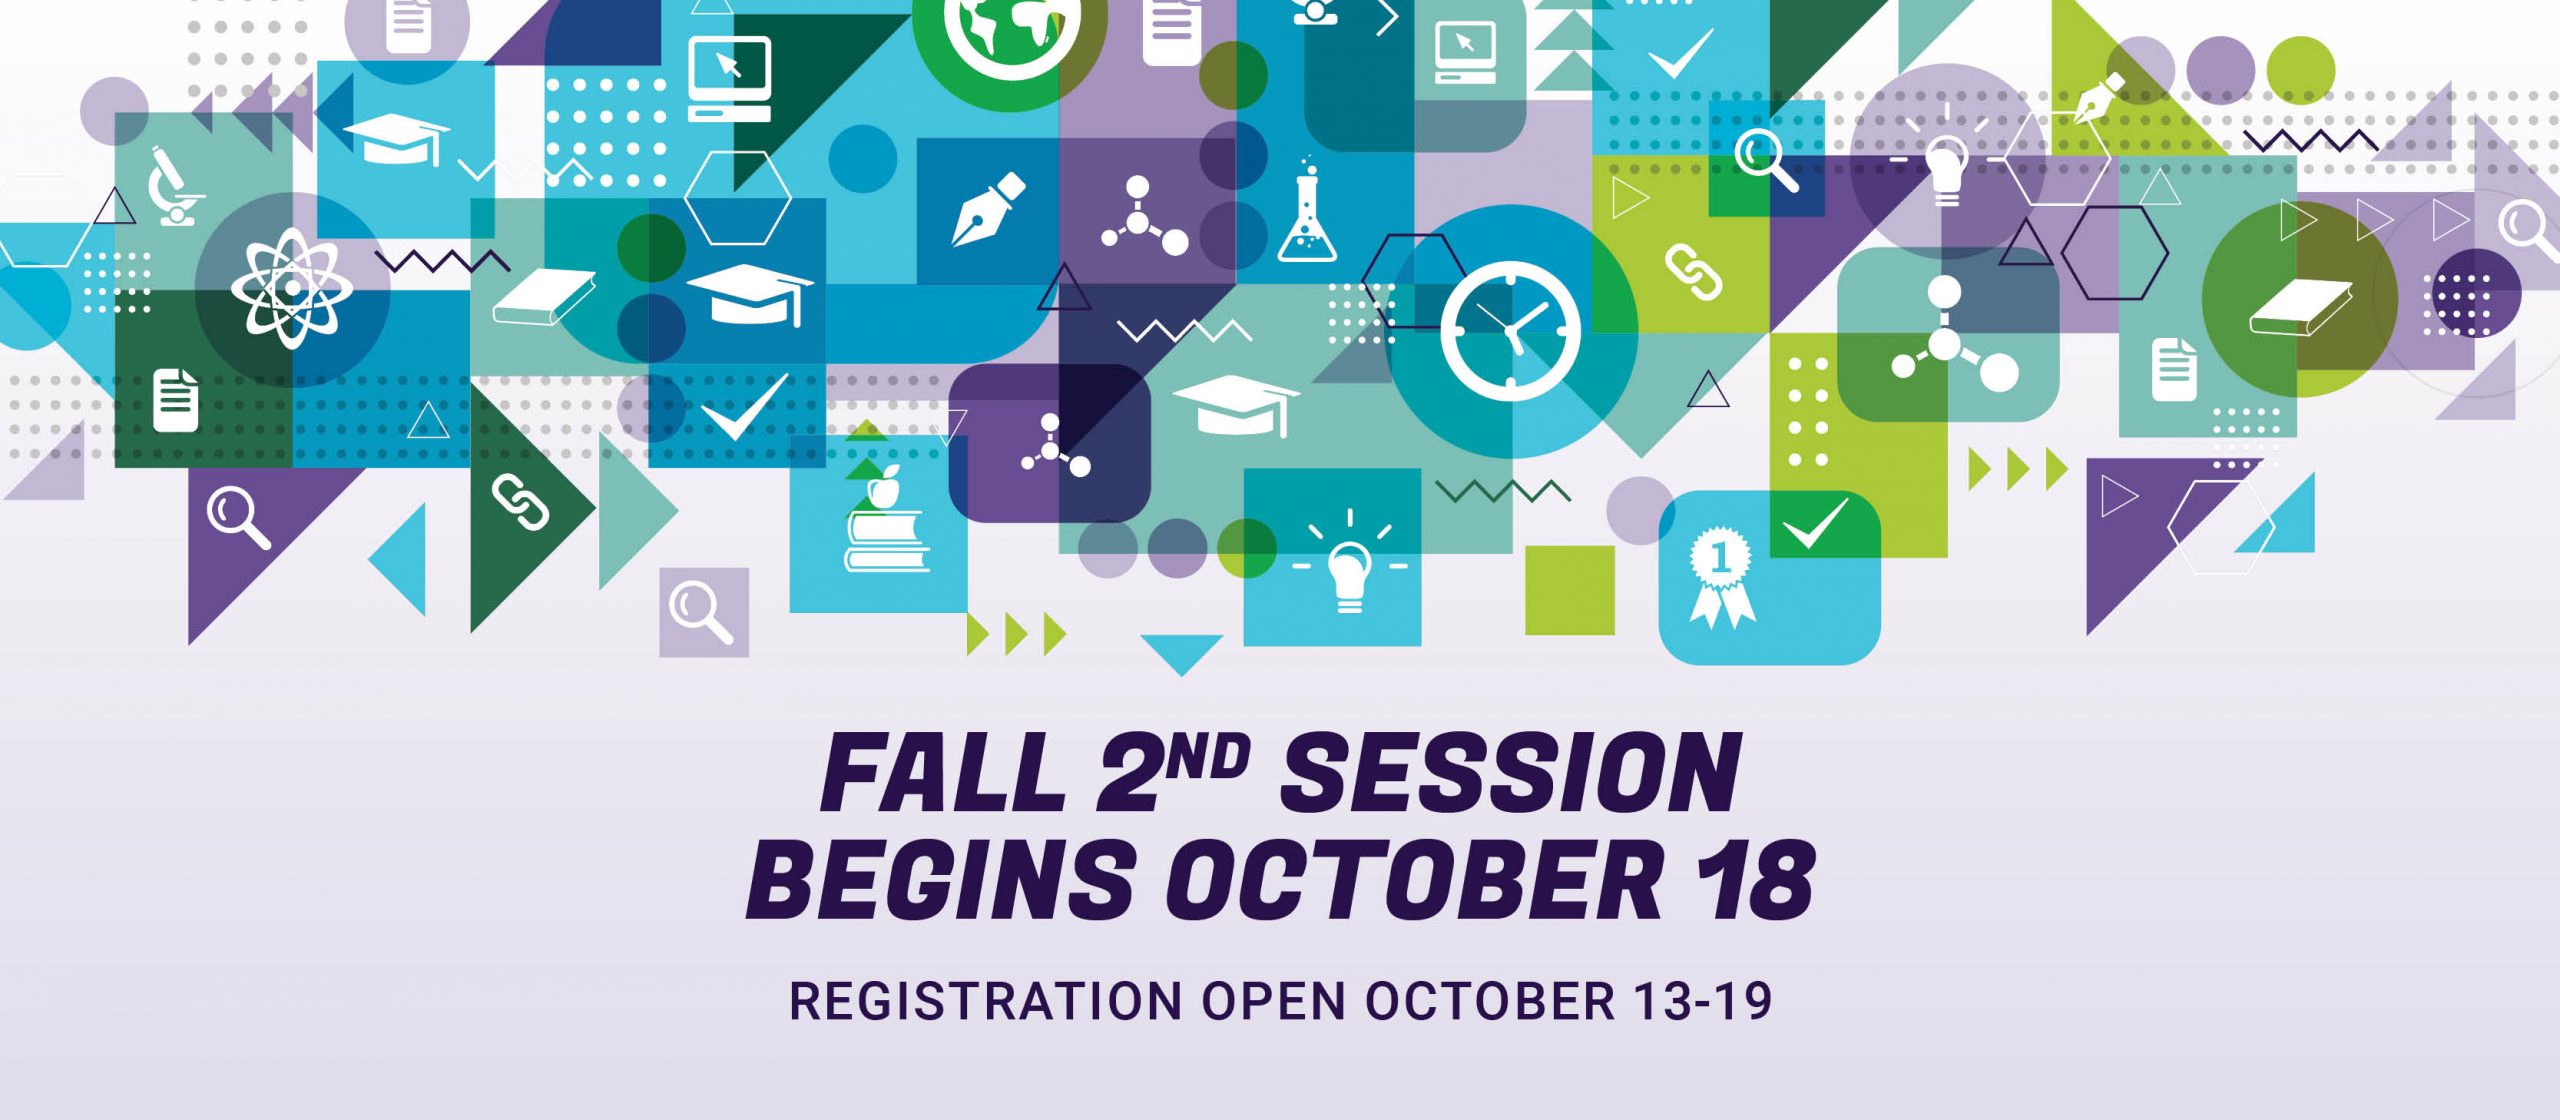 Fall 2nd Session Begins October 18, Registration Open October 13-19